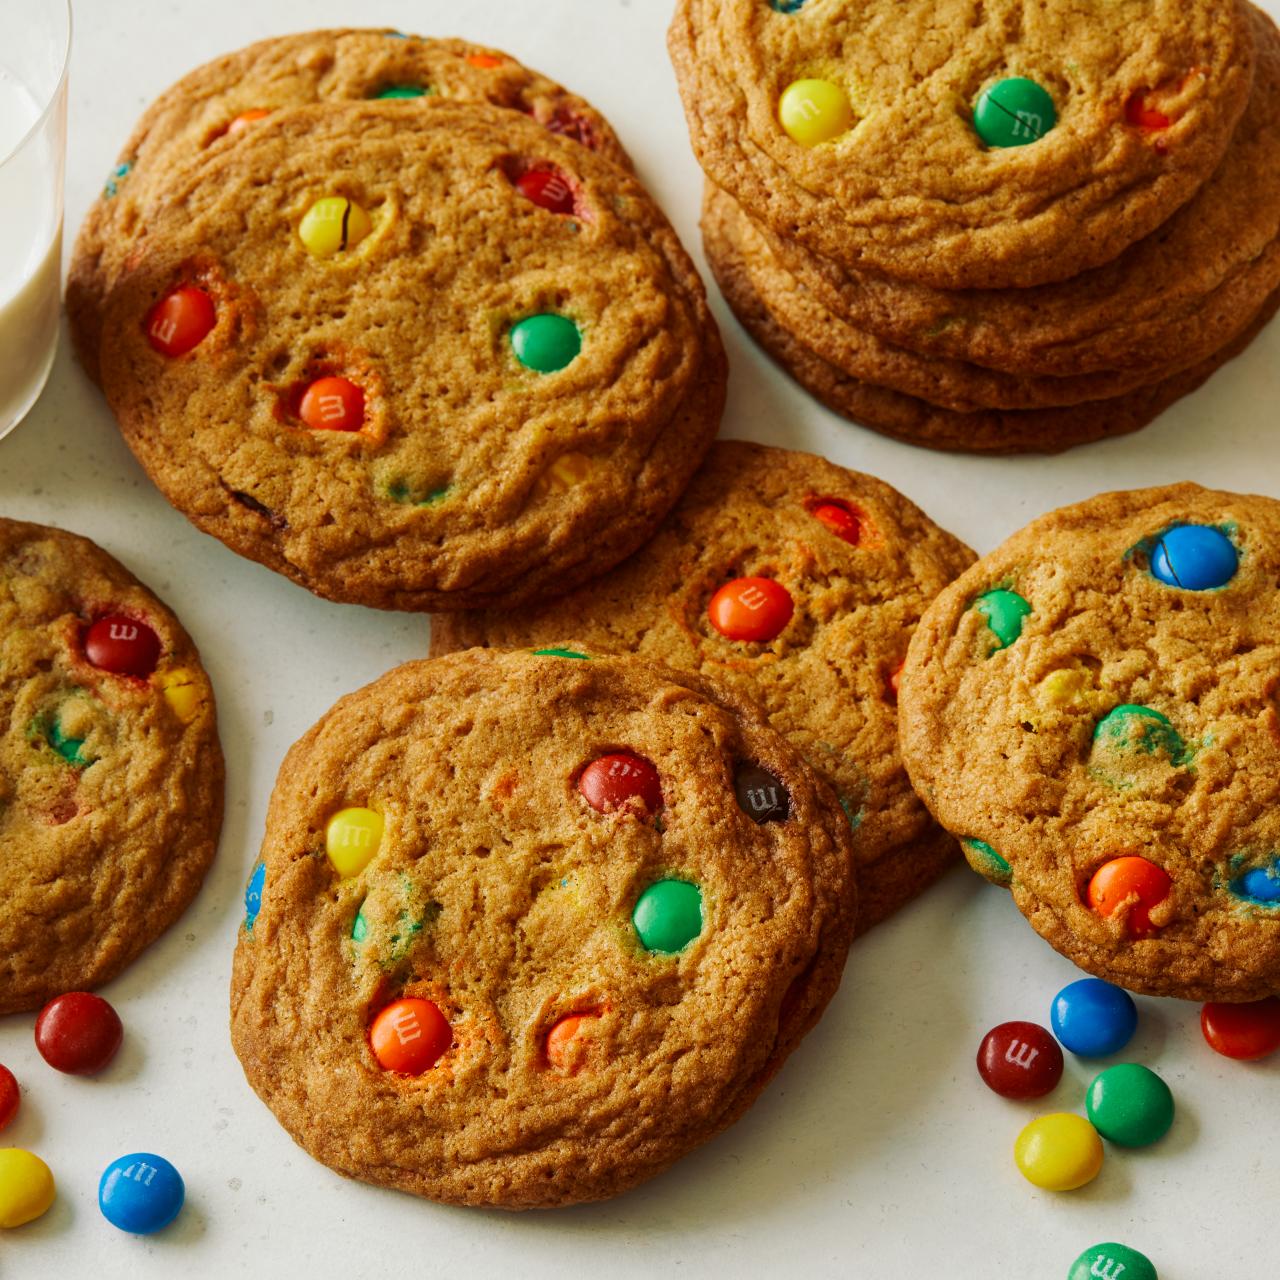 M&M Cookies + Video {The BEST Recipe!}